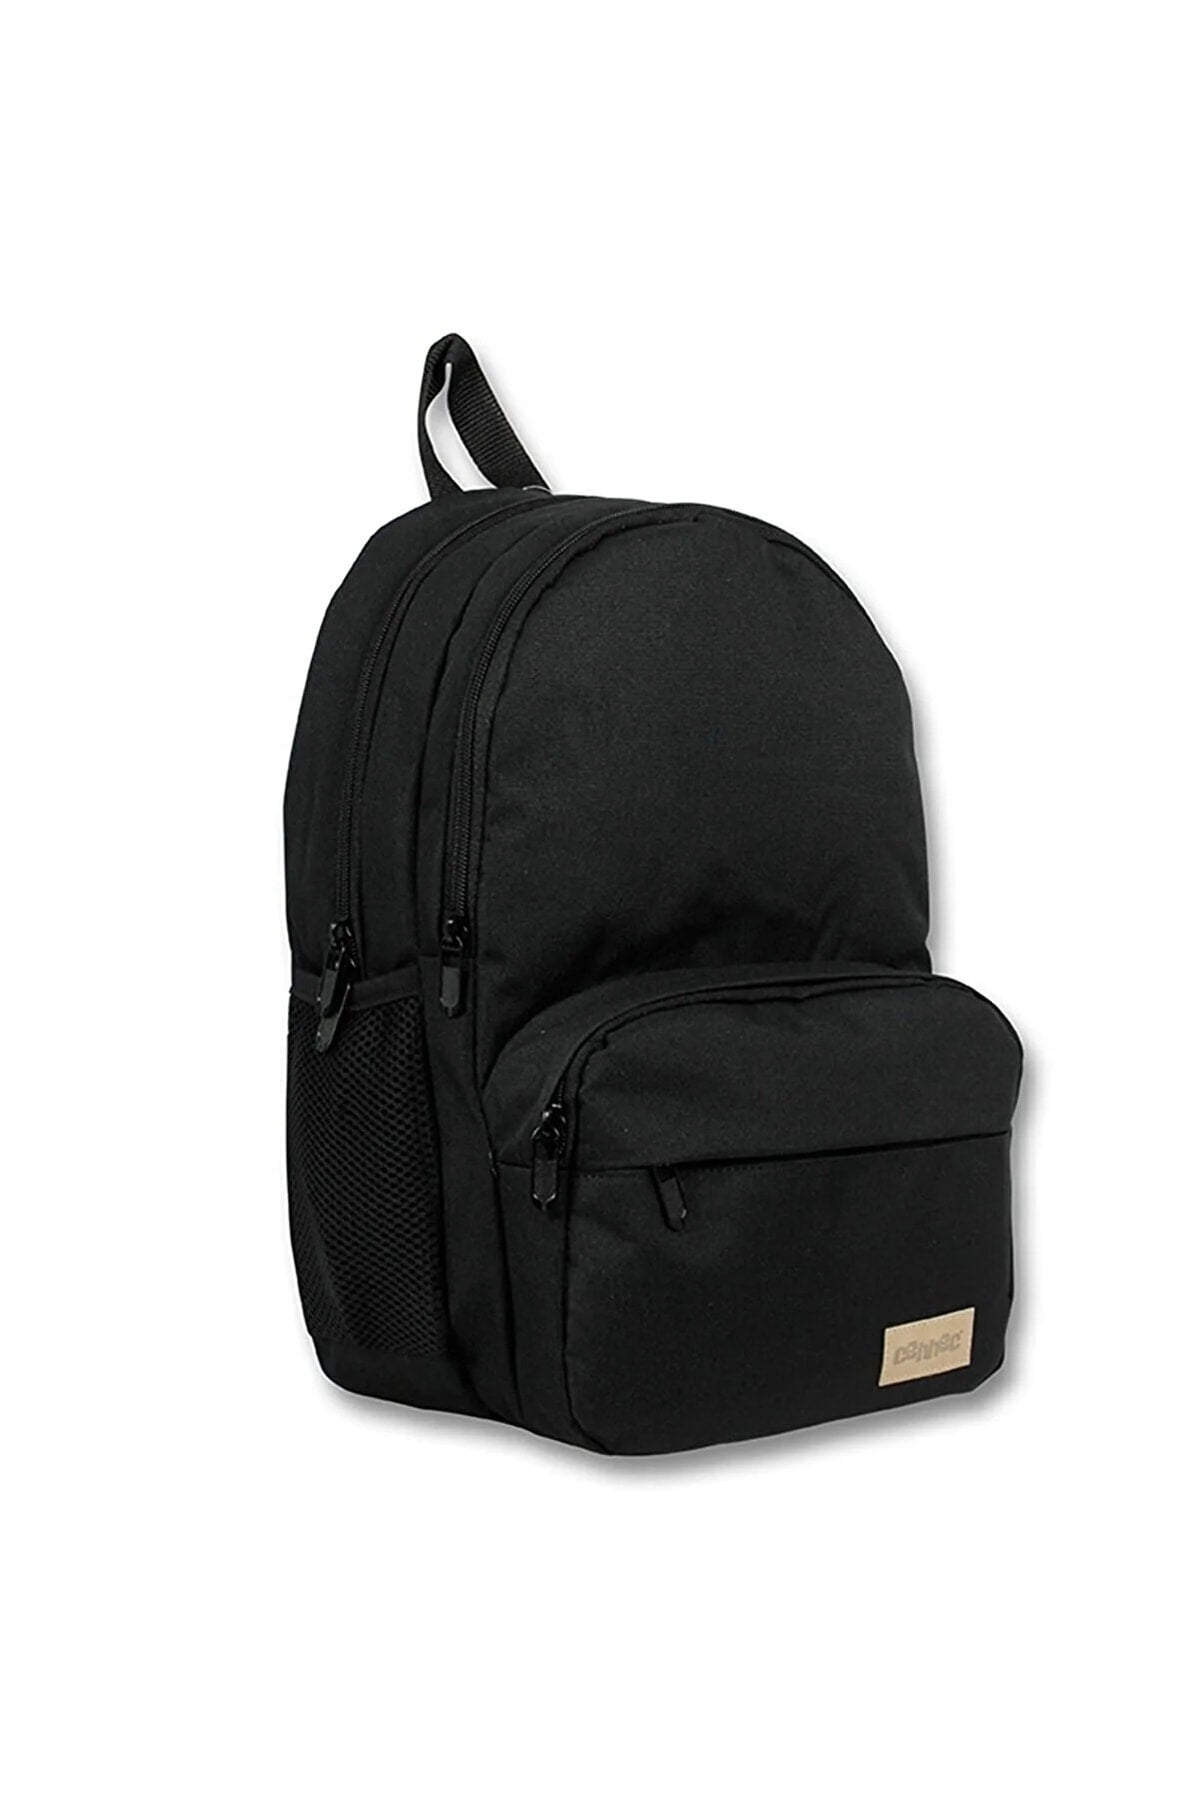 -cennec Primary And Secondary School Black School Bag-2628